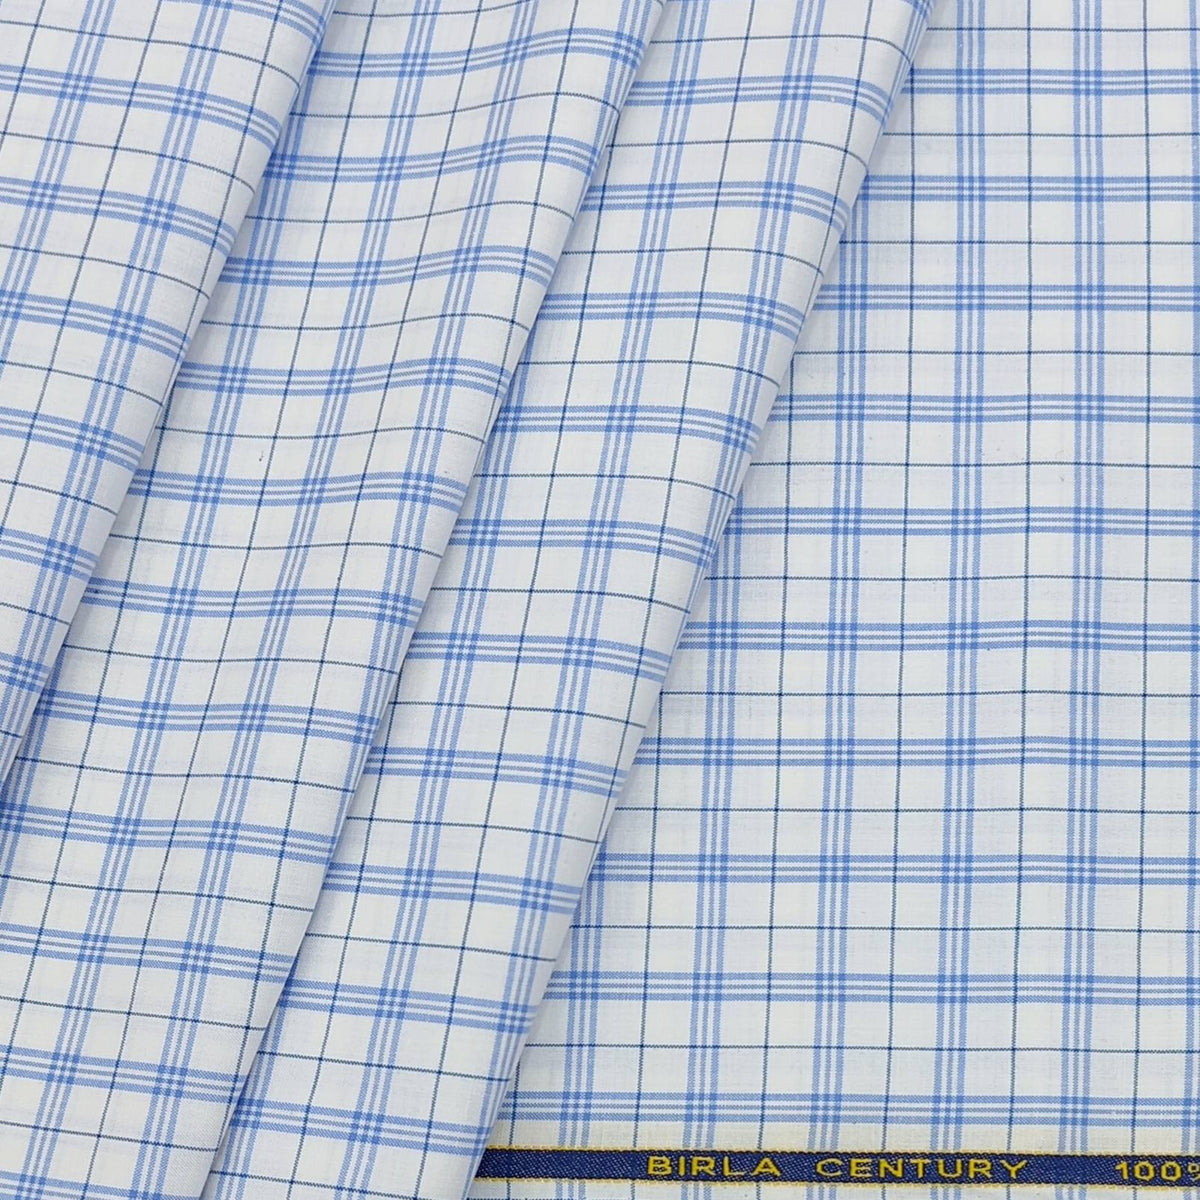 Birla Century 100% cotton Premium Formal Check Shirt Fabric Colour Light Blue